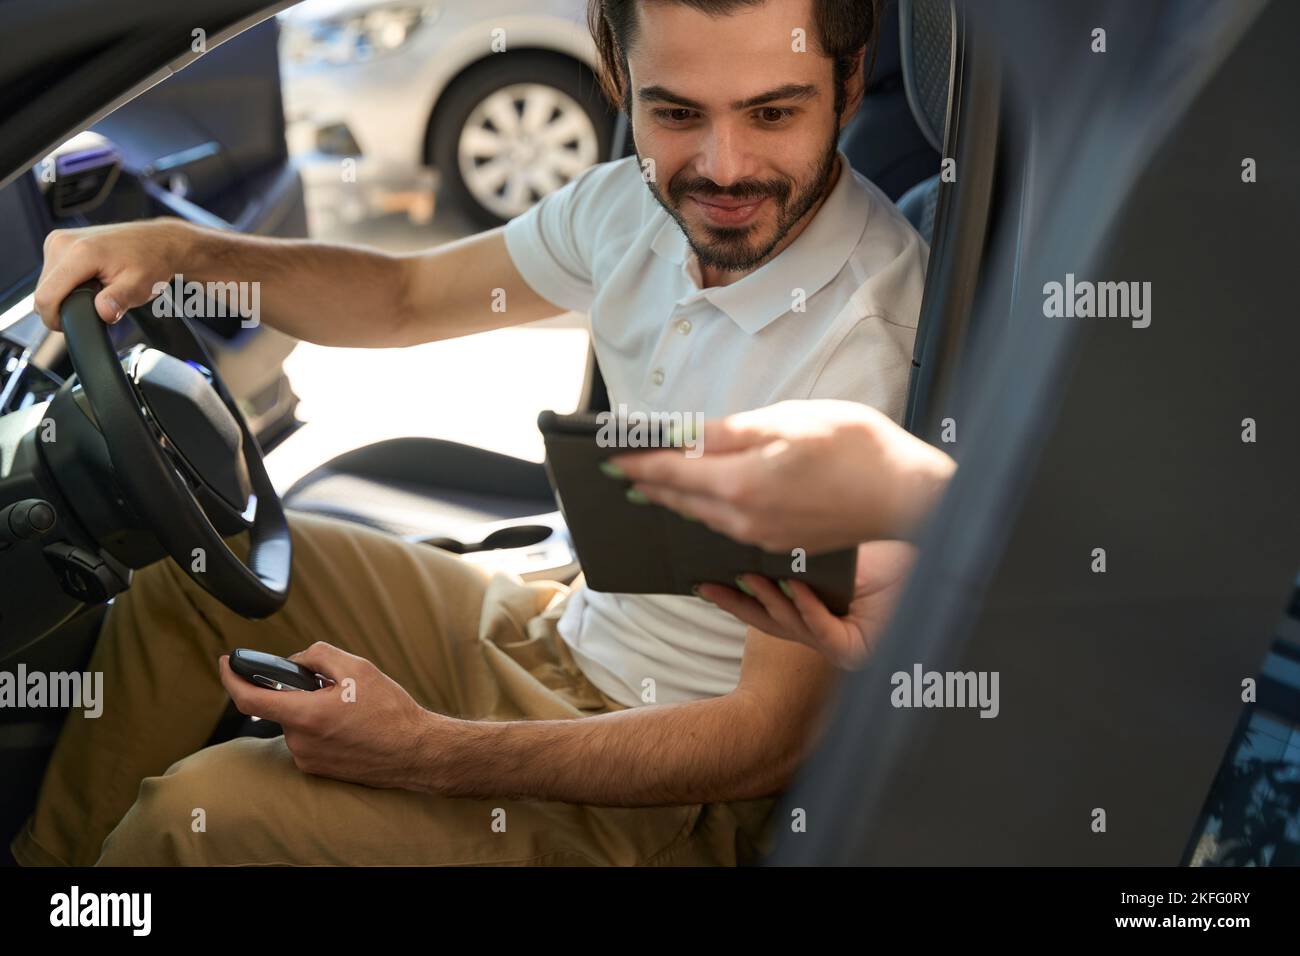 Happy automotive buyer reading digital car purchase agreement Stock Photo